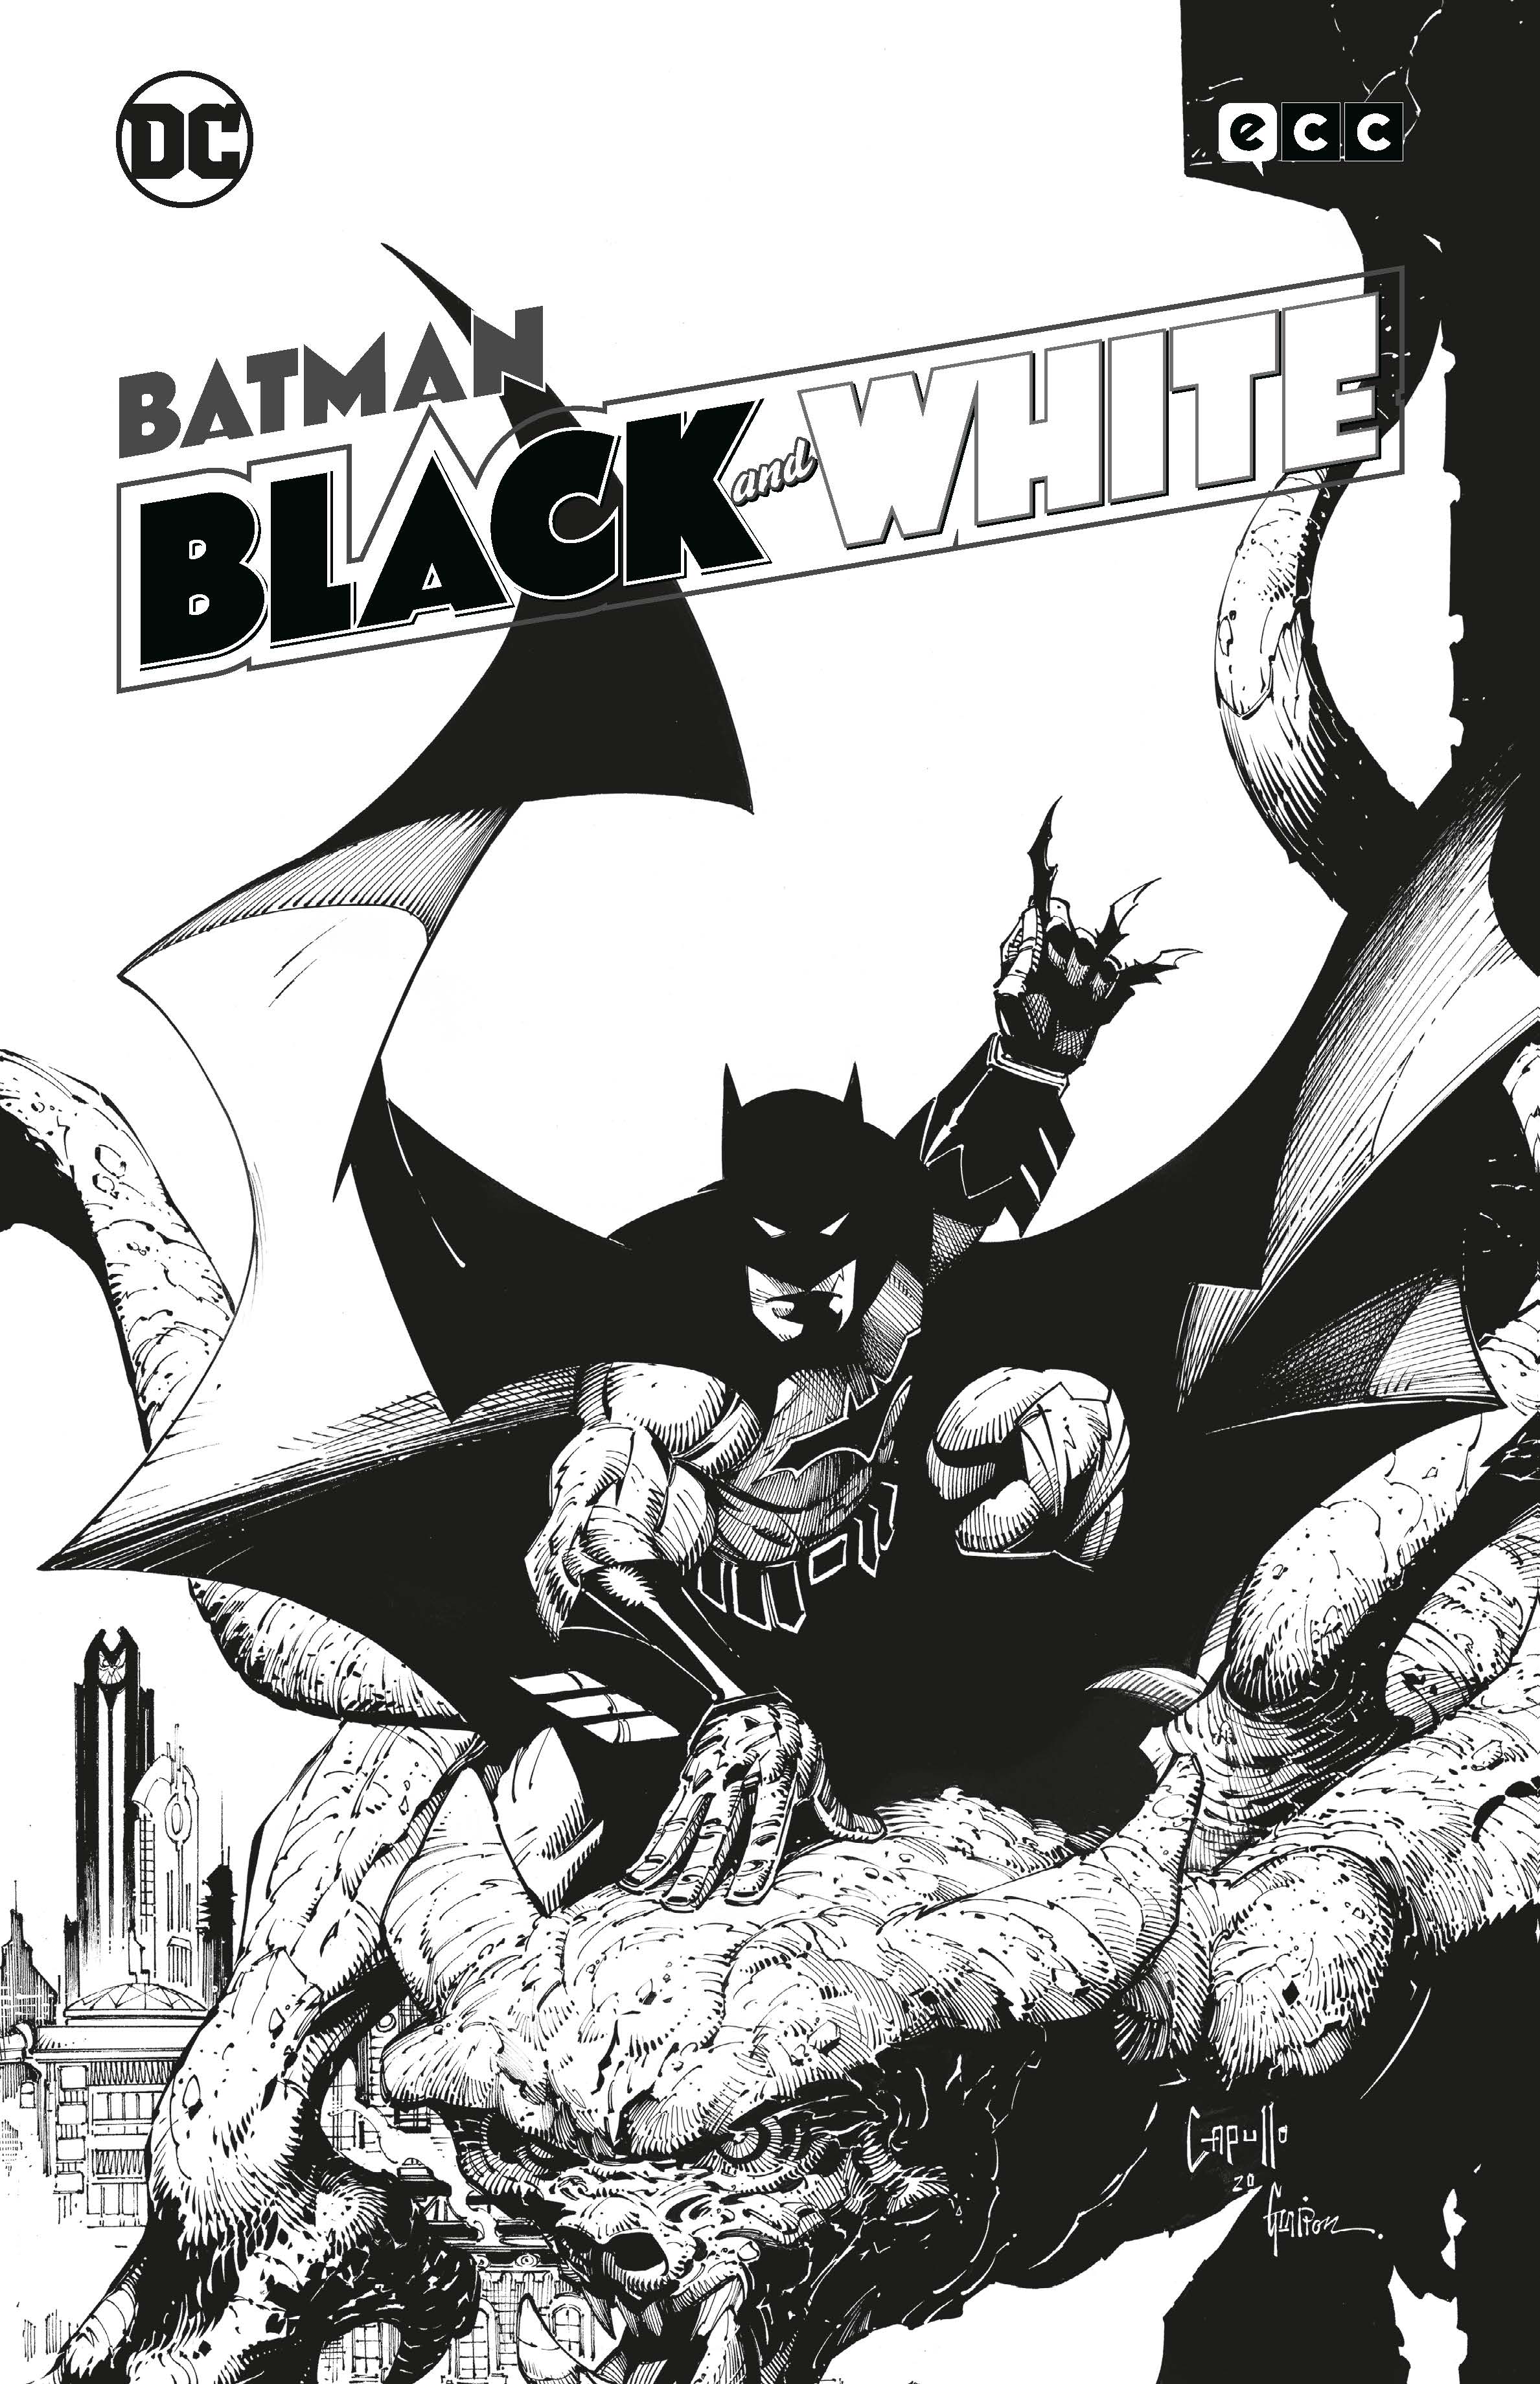 BATMAN: BLACK AND WHITE